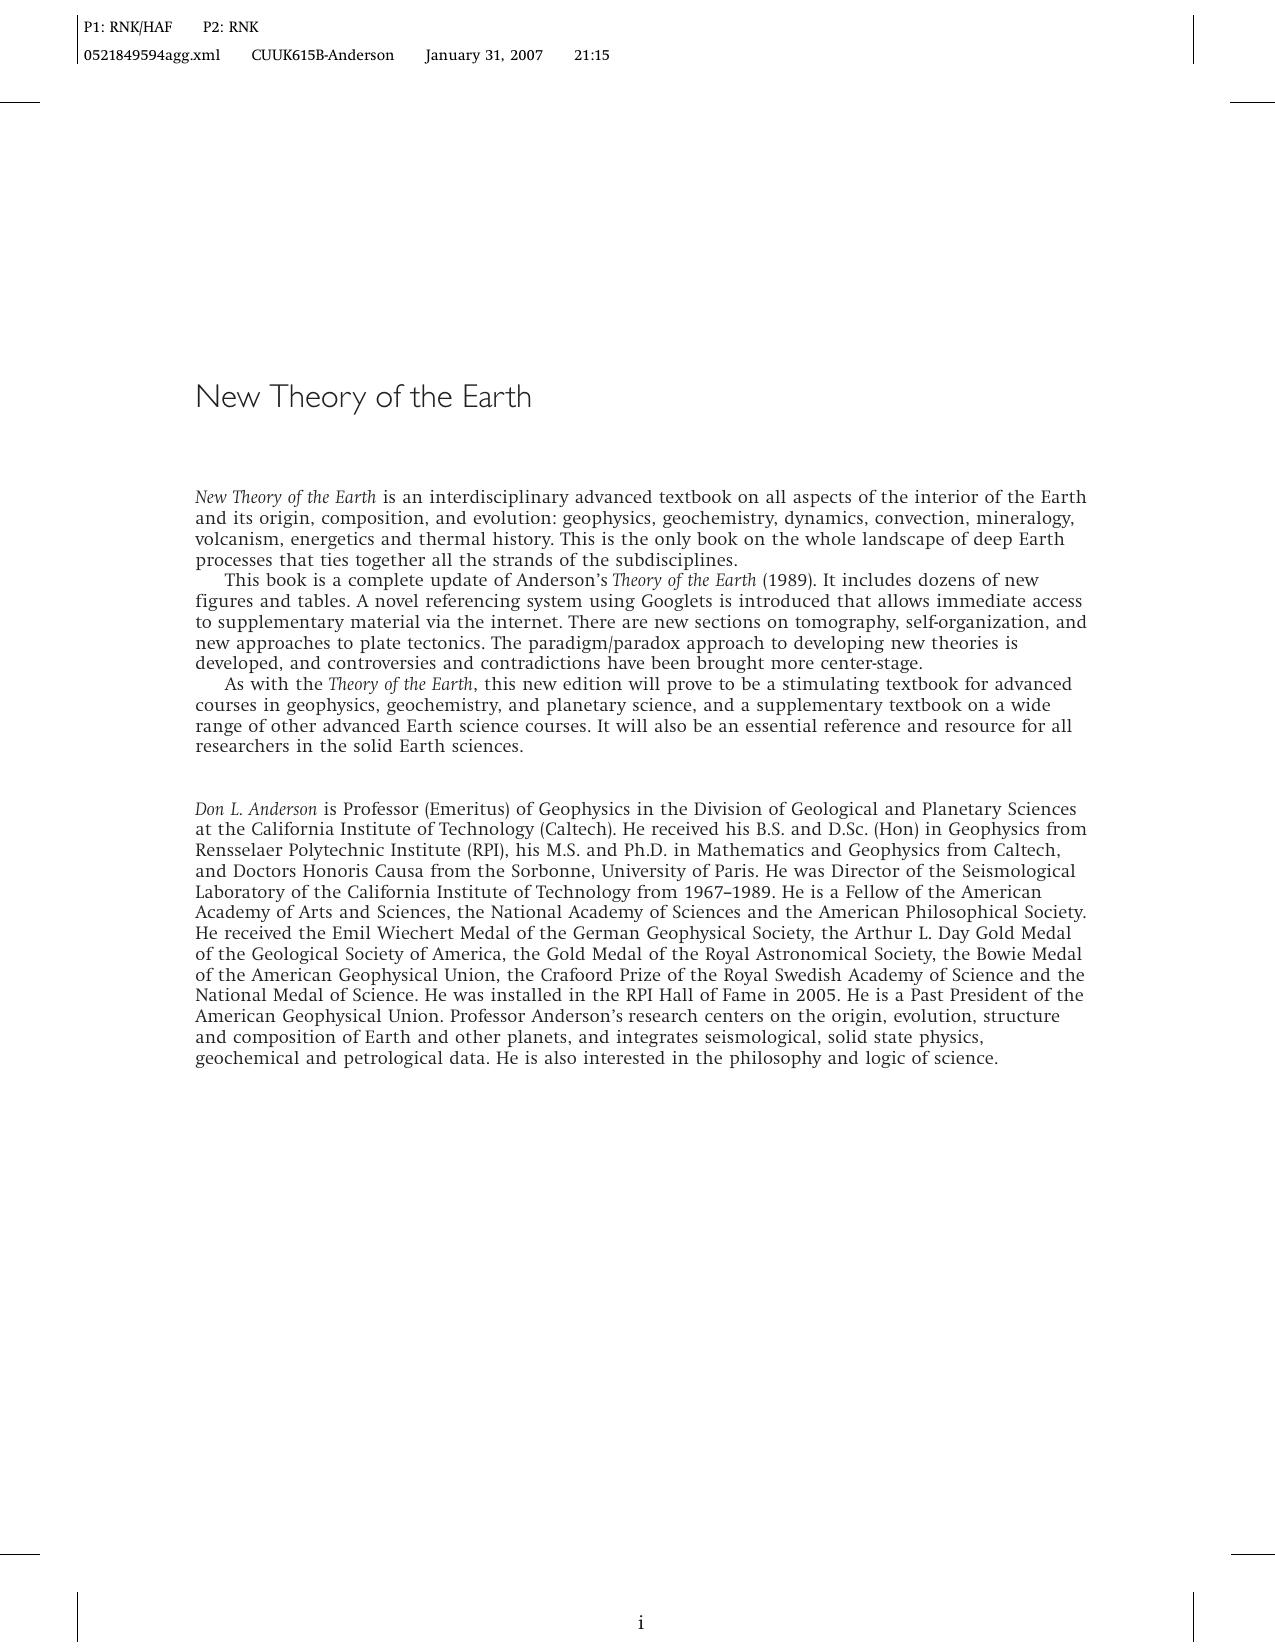 Cambridge University Press - New Theory Of The Earth